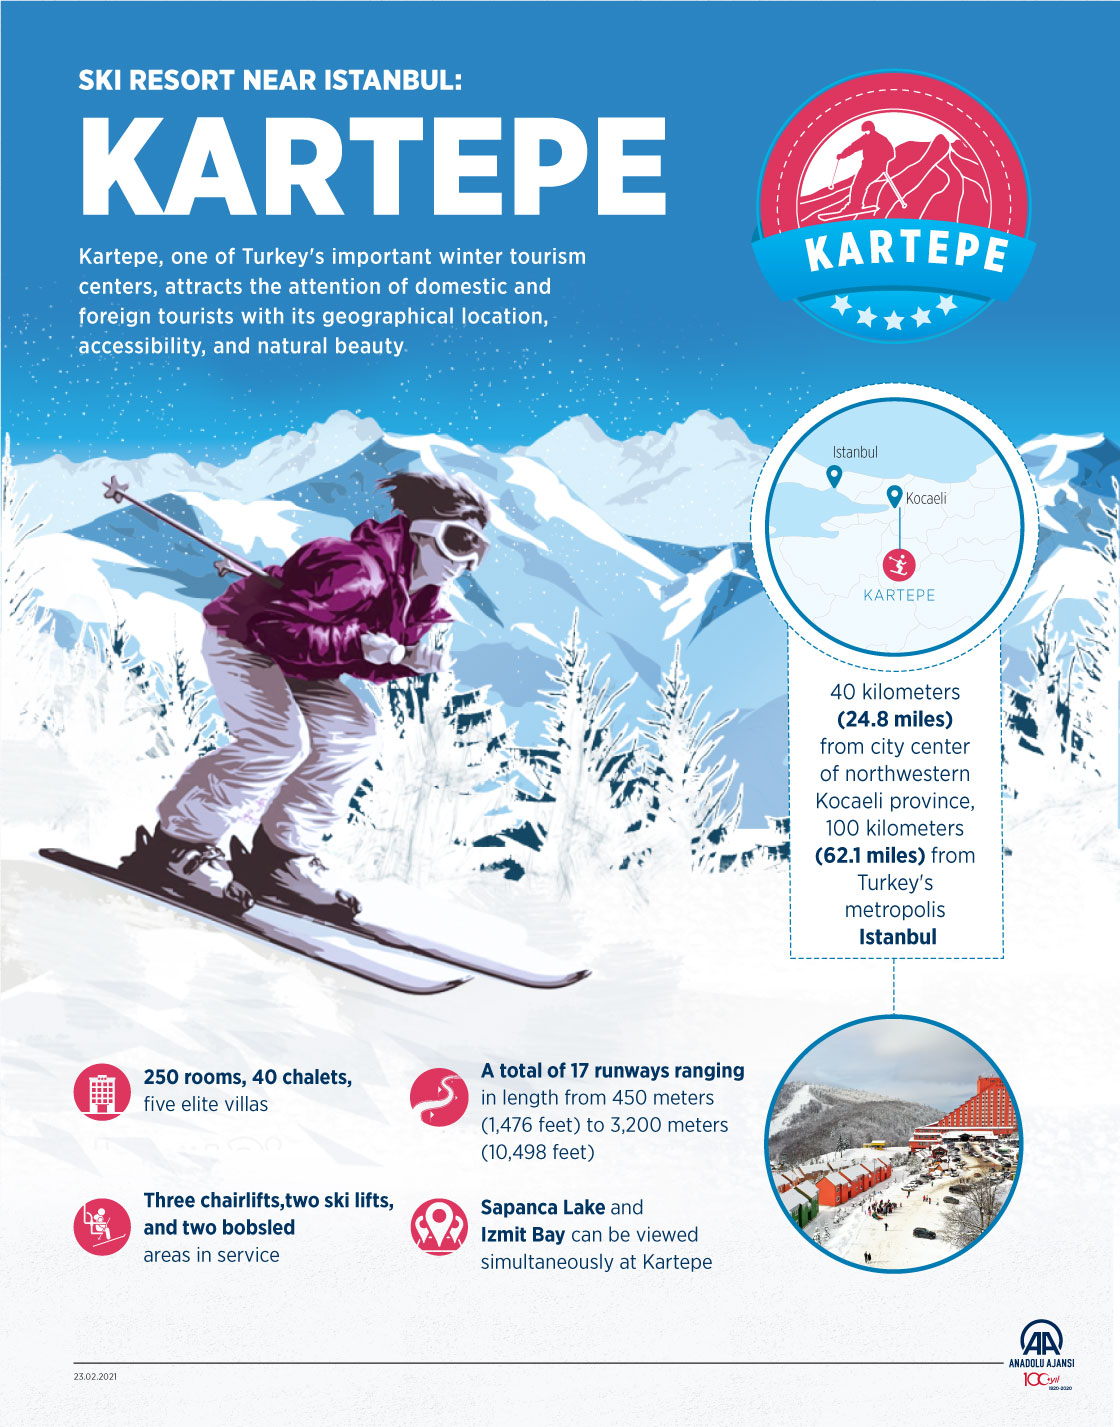  Ski resort near Istanbul : Kartepe